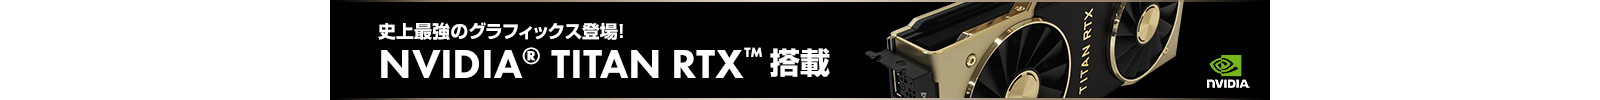 iiyama PC TITAN RTX搭載クリエイター向けミドルタワーパソコン banner